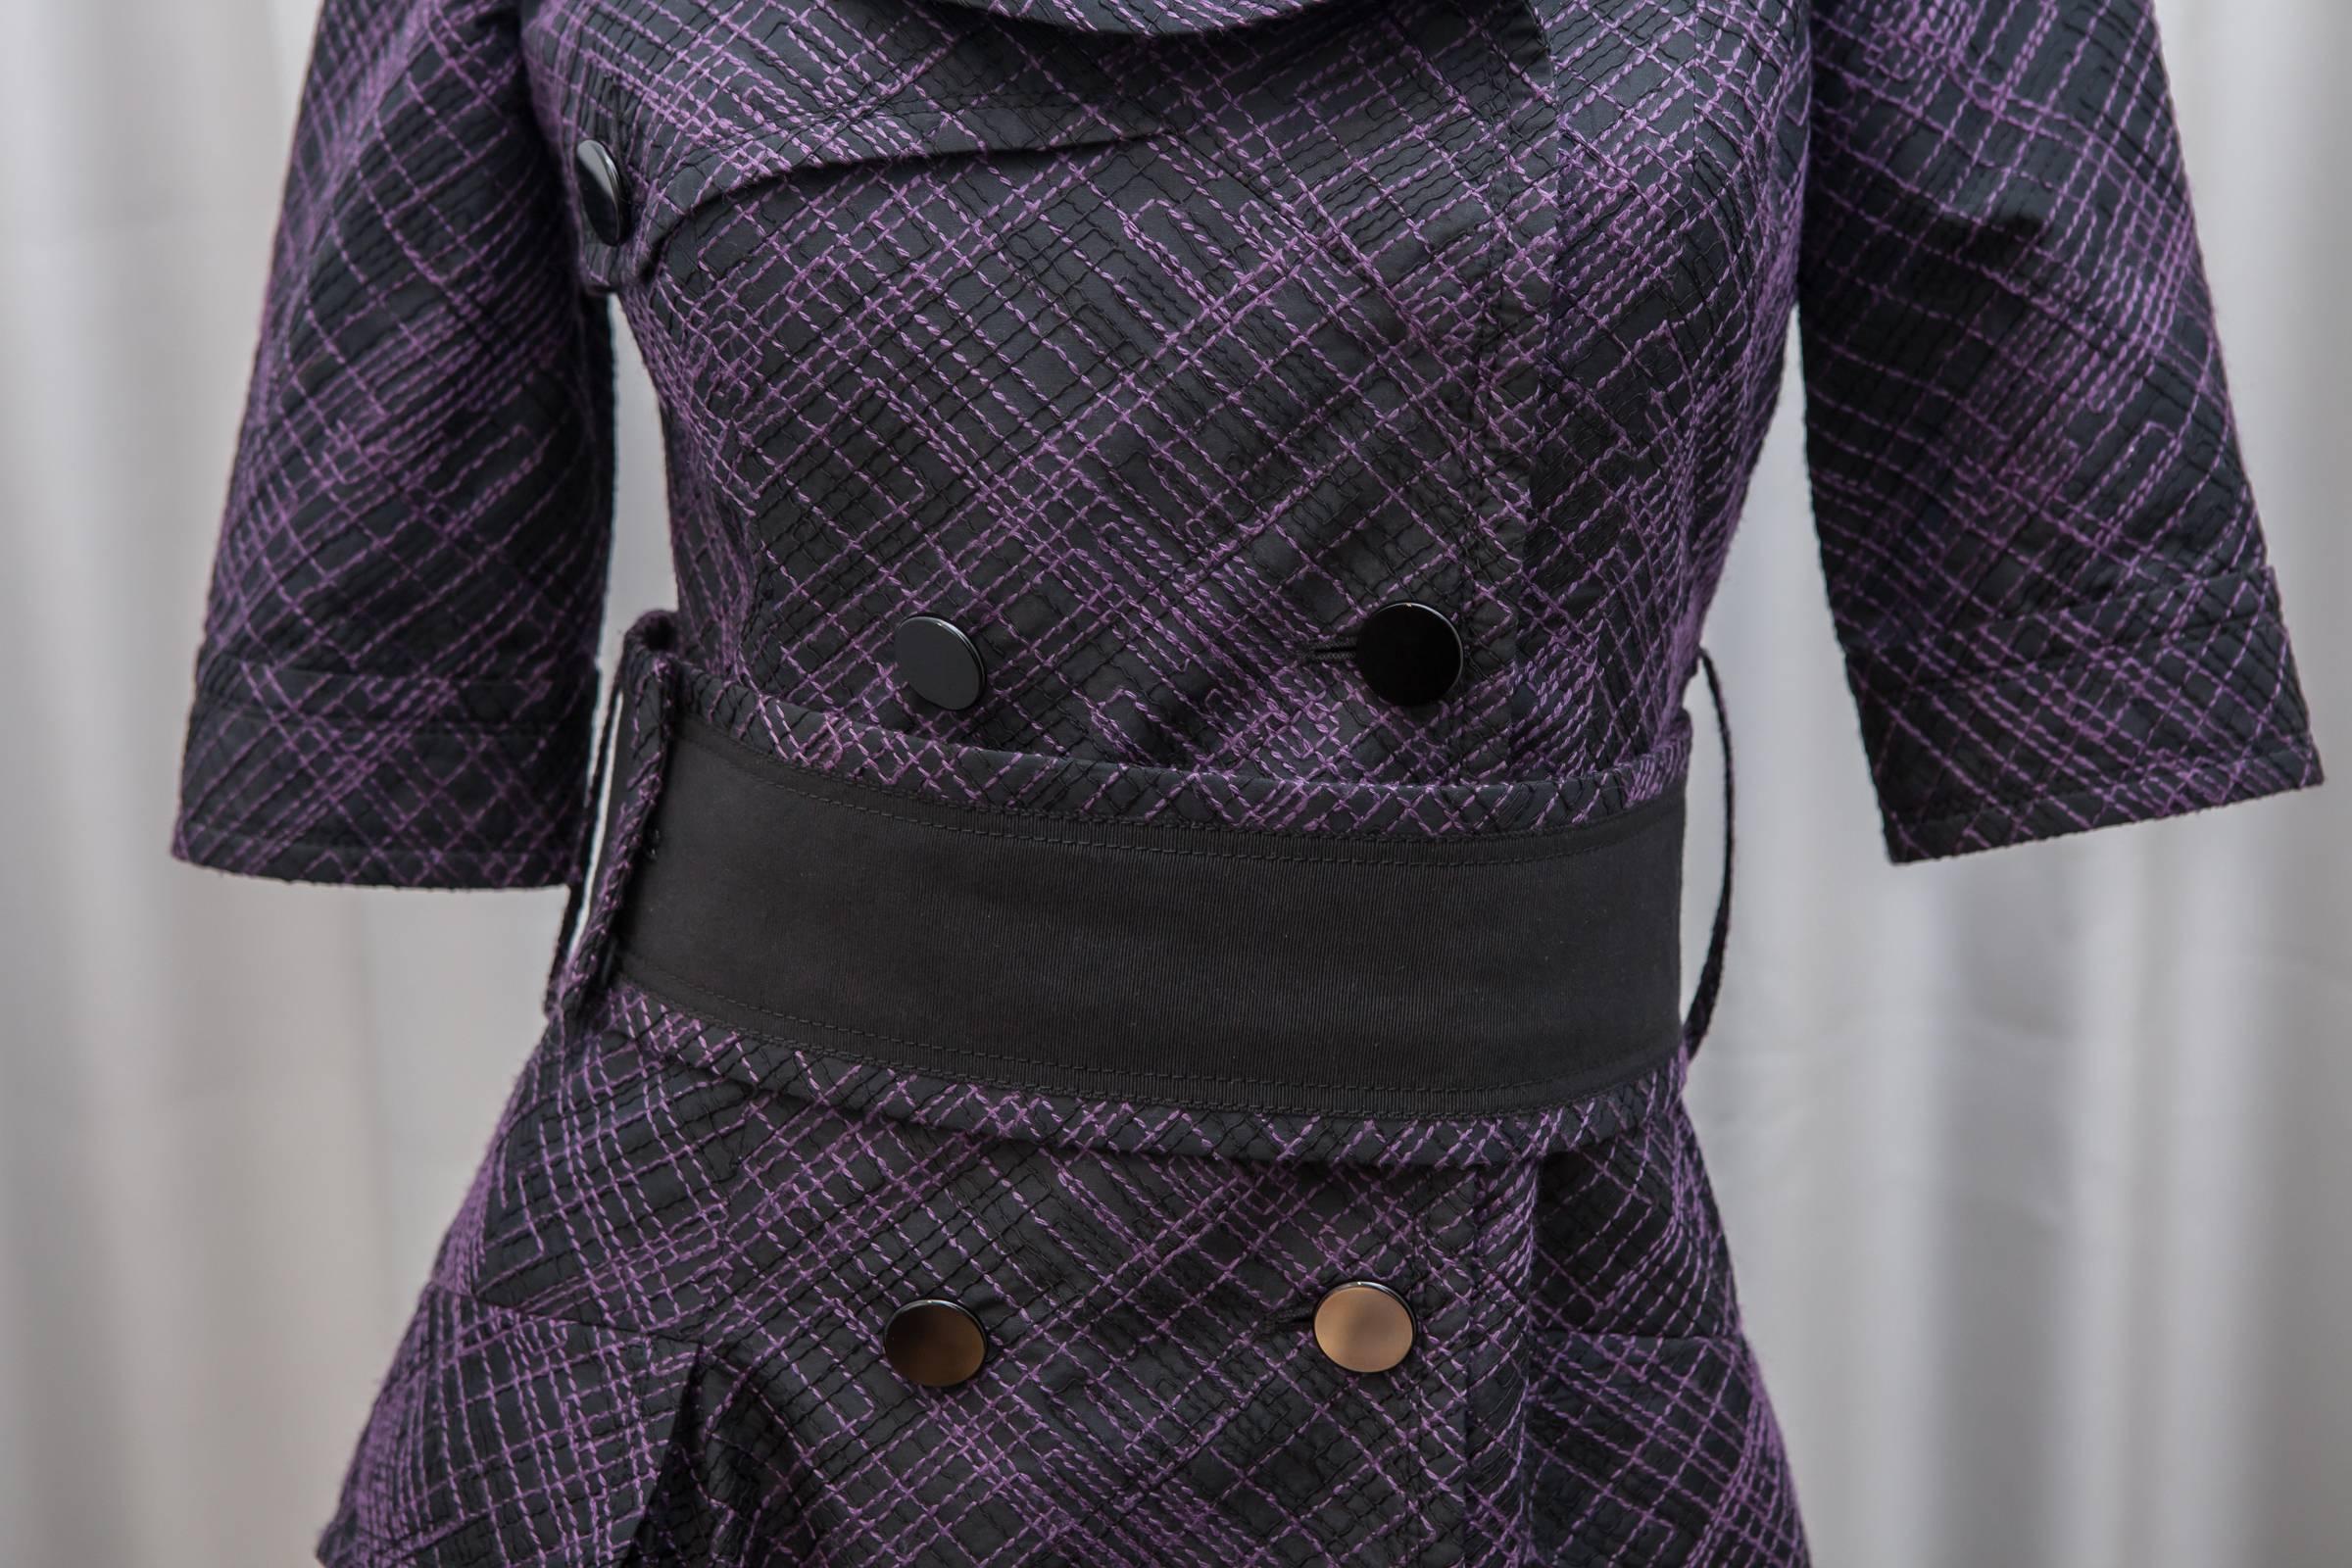 Carolina Herrera Purple and Black Patterned Gown 3